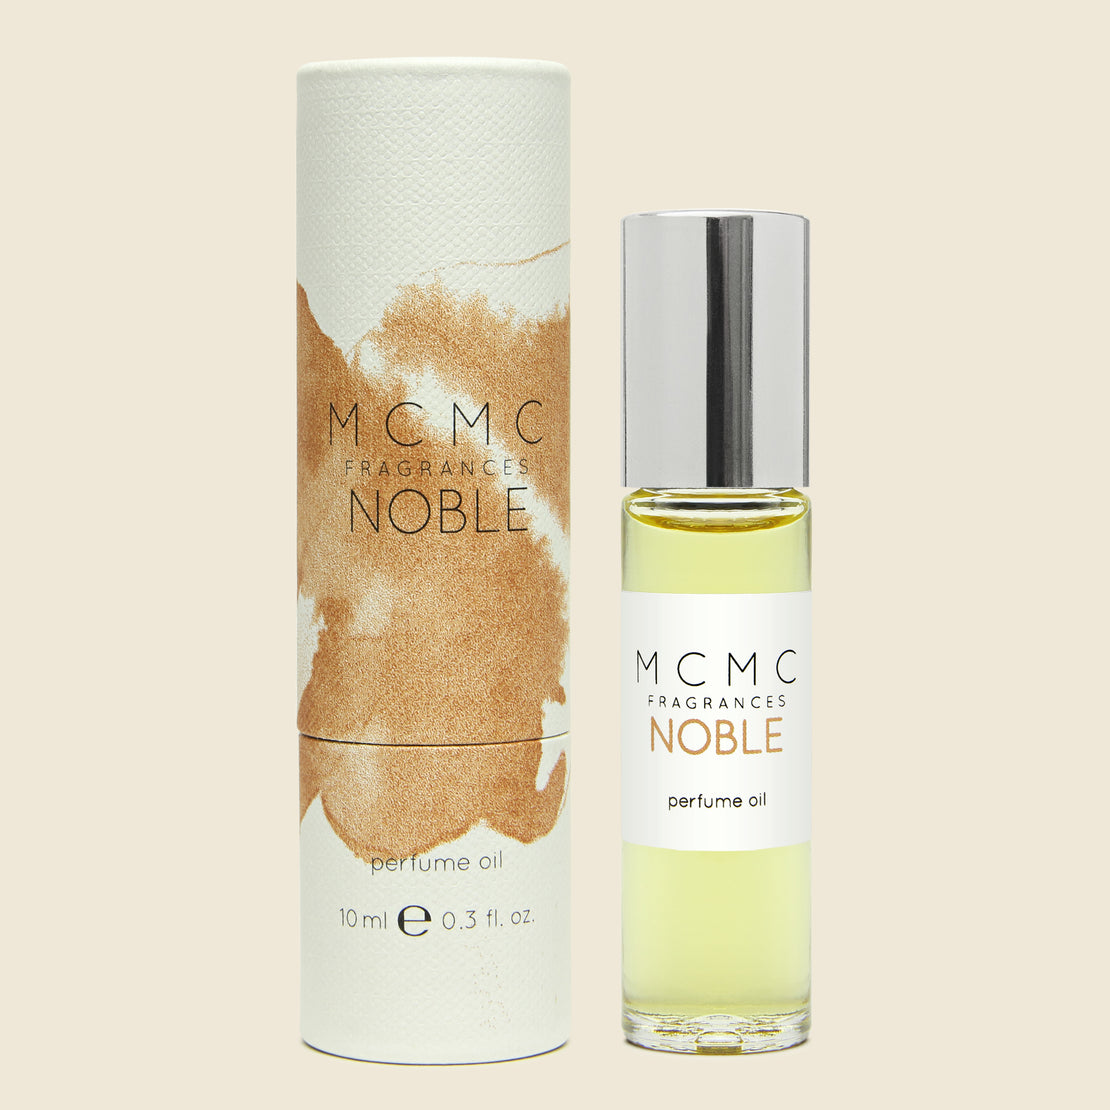 MCMC Fragrances Perfume Oil - NOBLE, 9ml